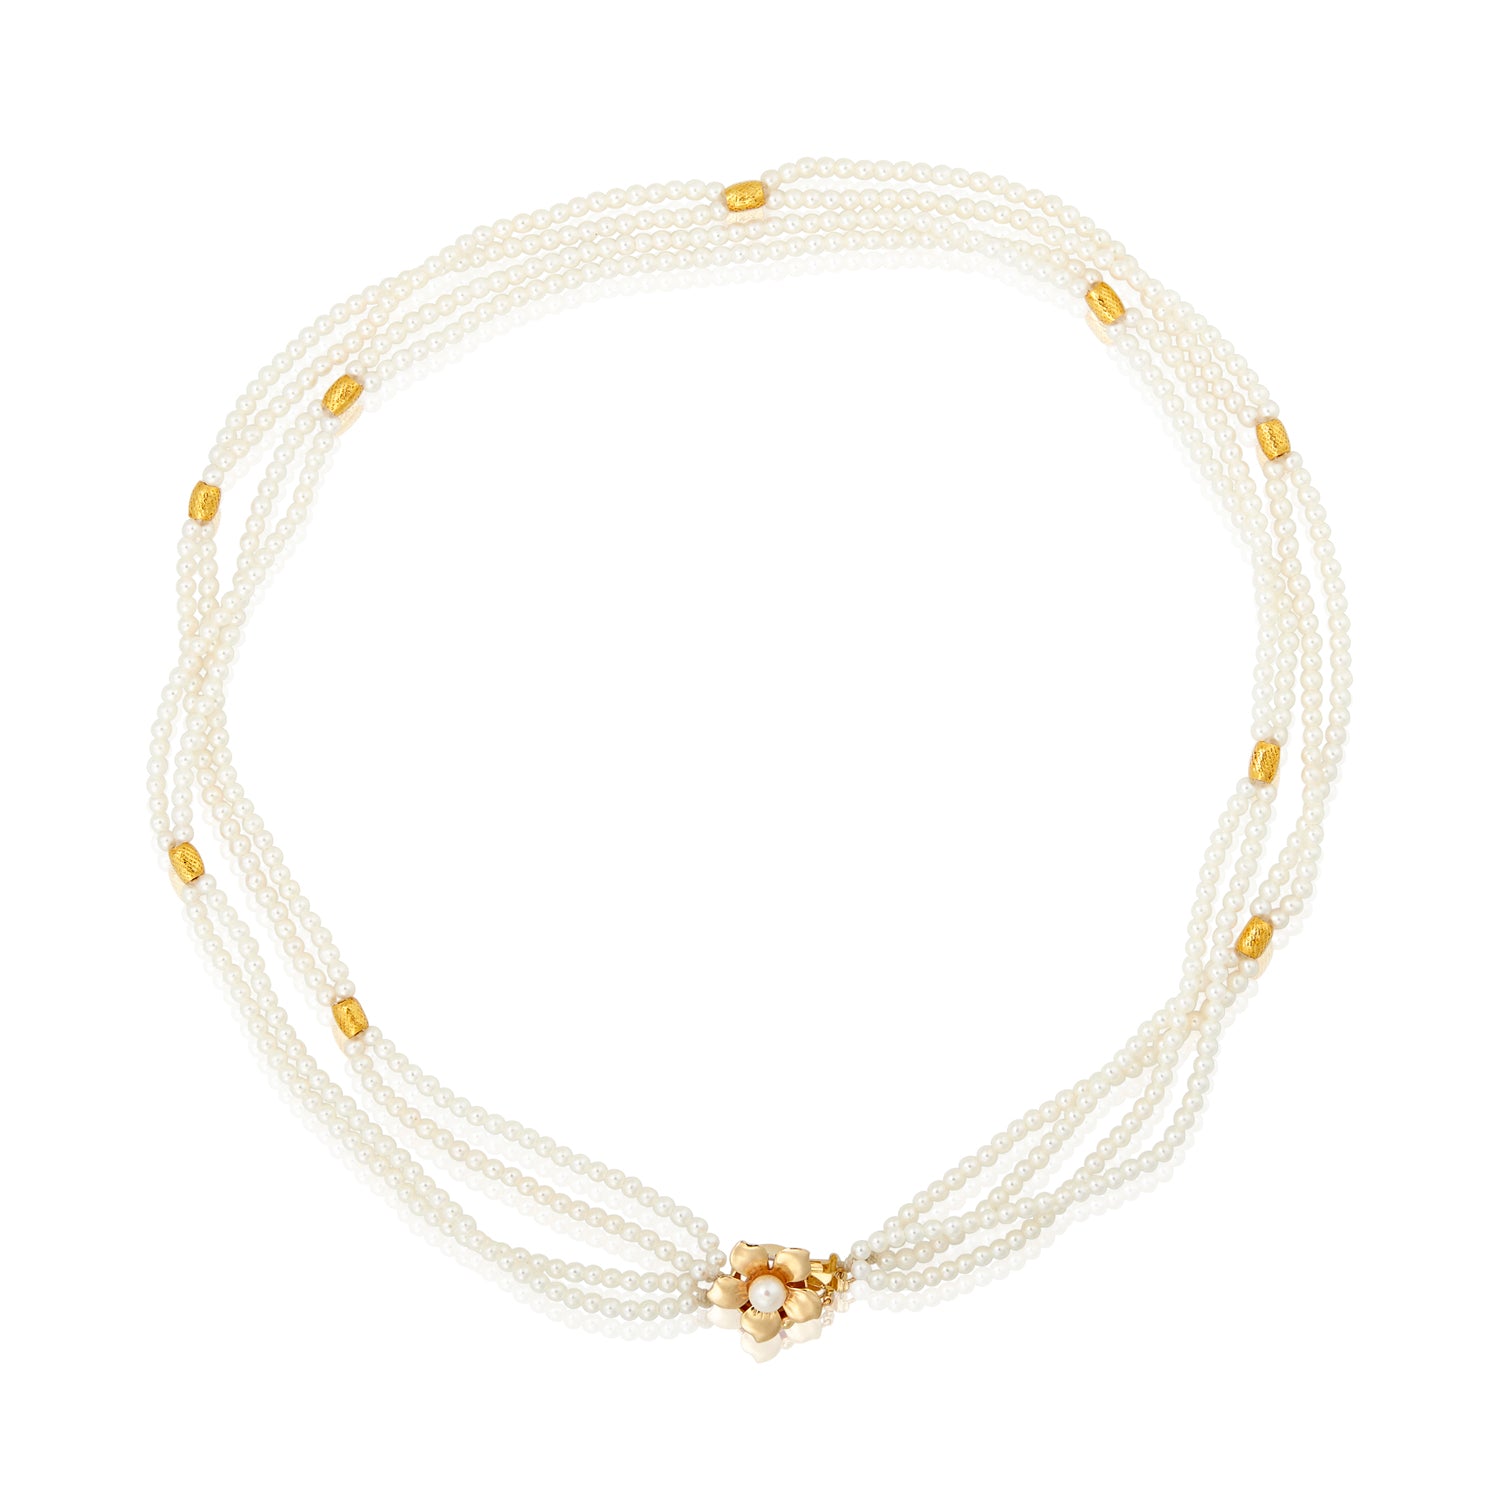 Gloria Multistrand Pearls Necklace in 14k